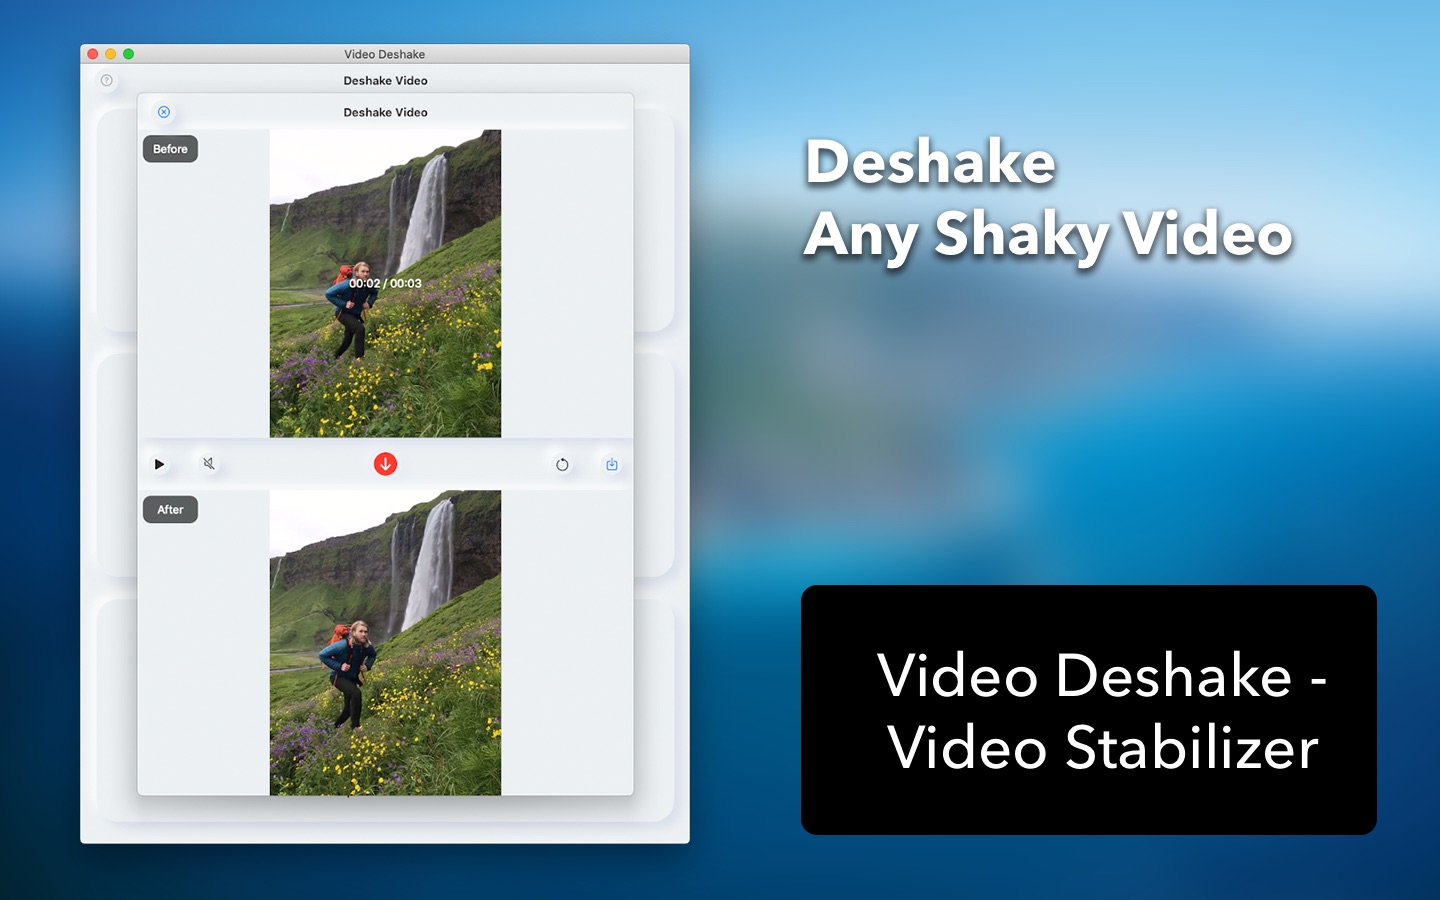 DeshakeVideo 1.0 : Main Window